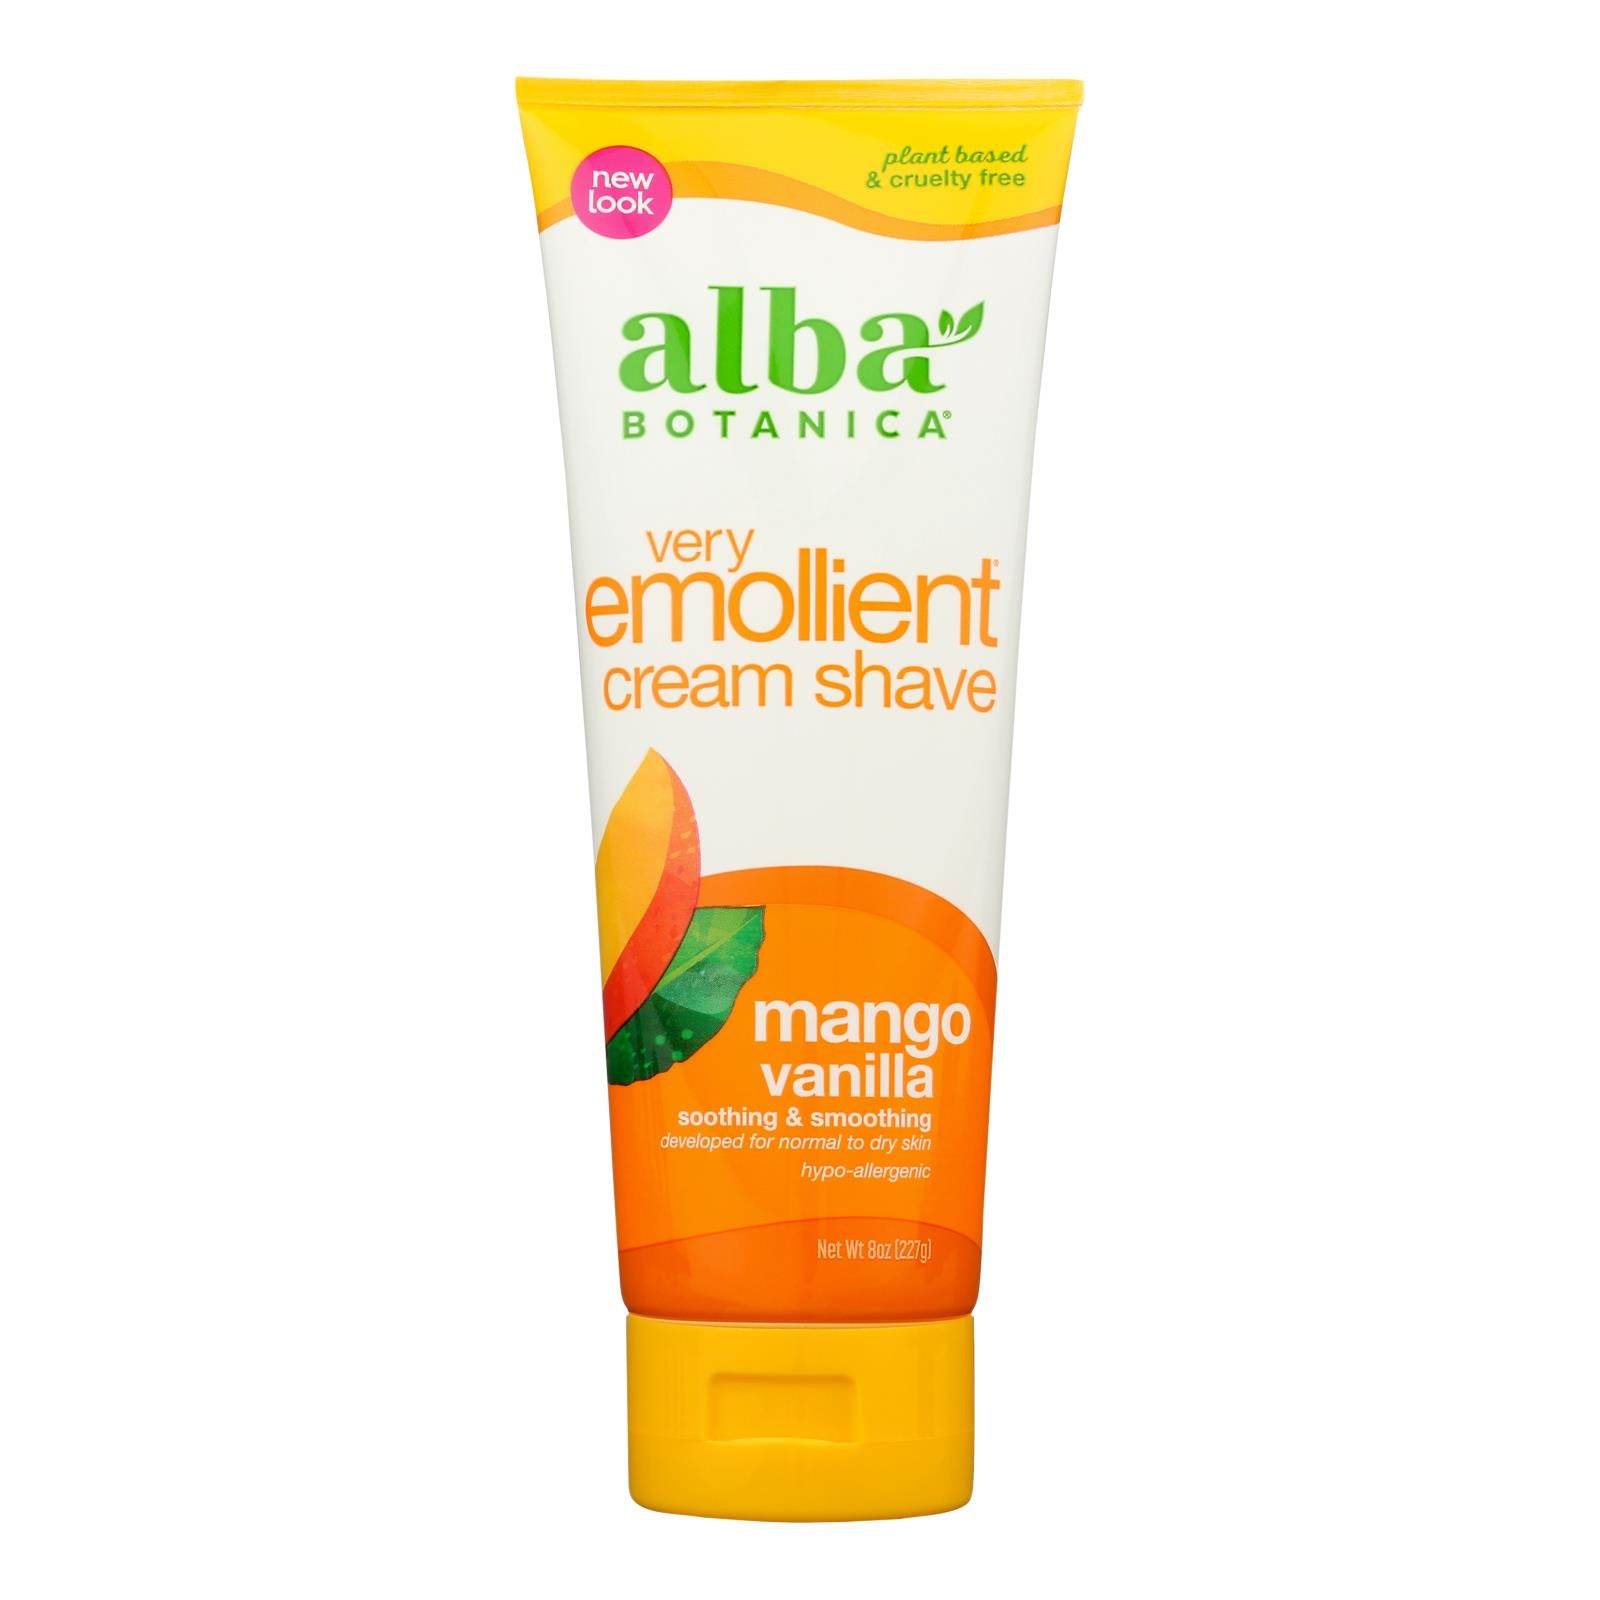 Alba Botanica - Very Emollient Cream Shave - Mango Vanilla - 8 Oz